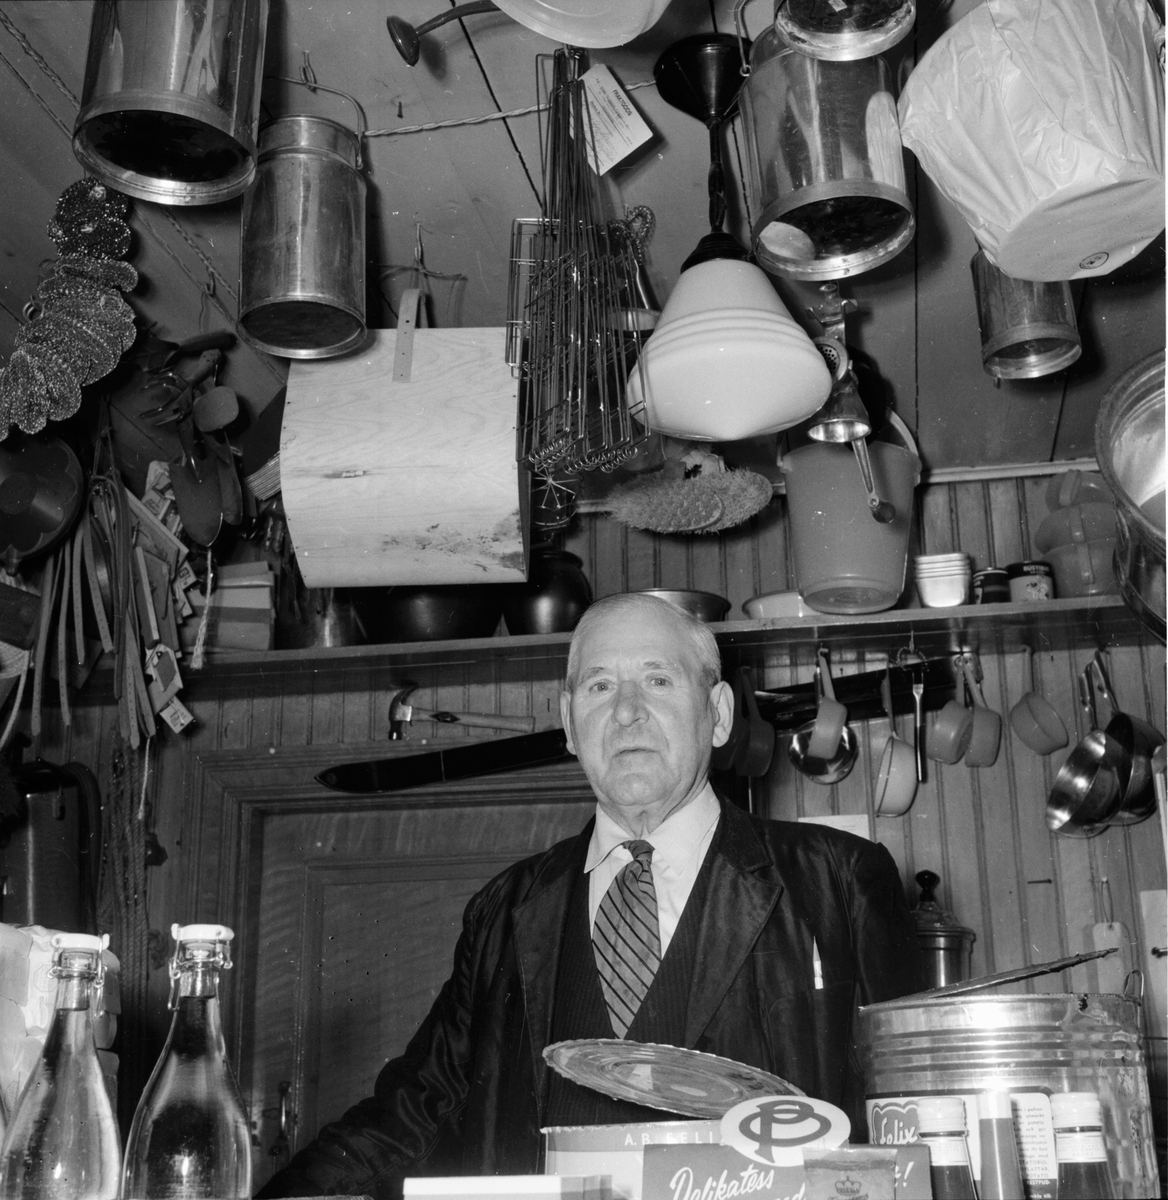 Handlare Andersson.
V.Höle 16/4 1956